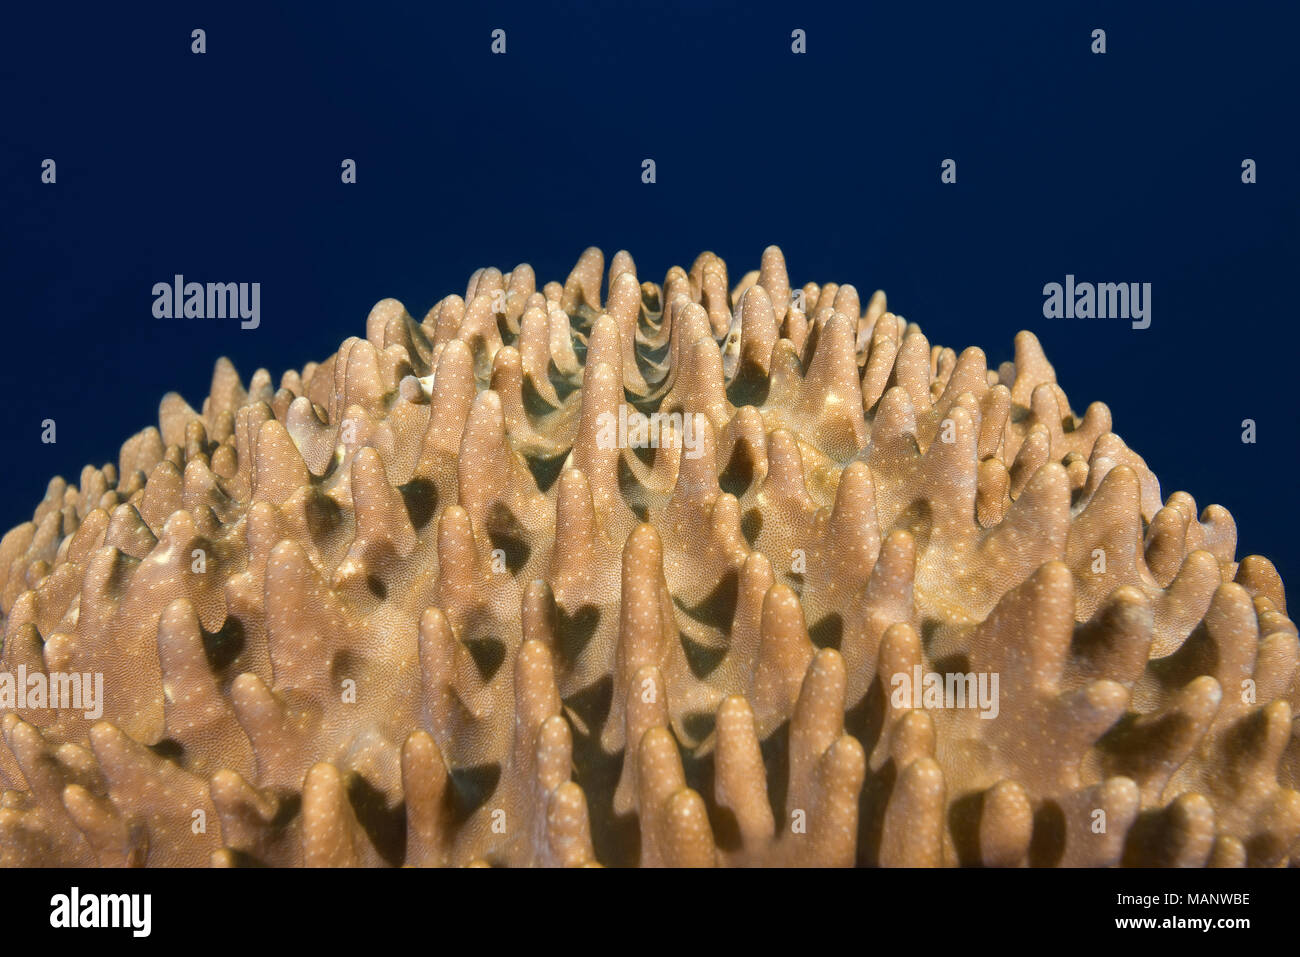 Soft coral - Leather Coral (Sinularia gibberosa) Stock Photo